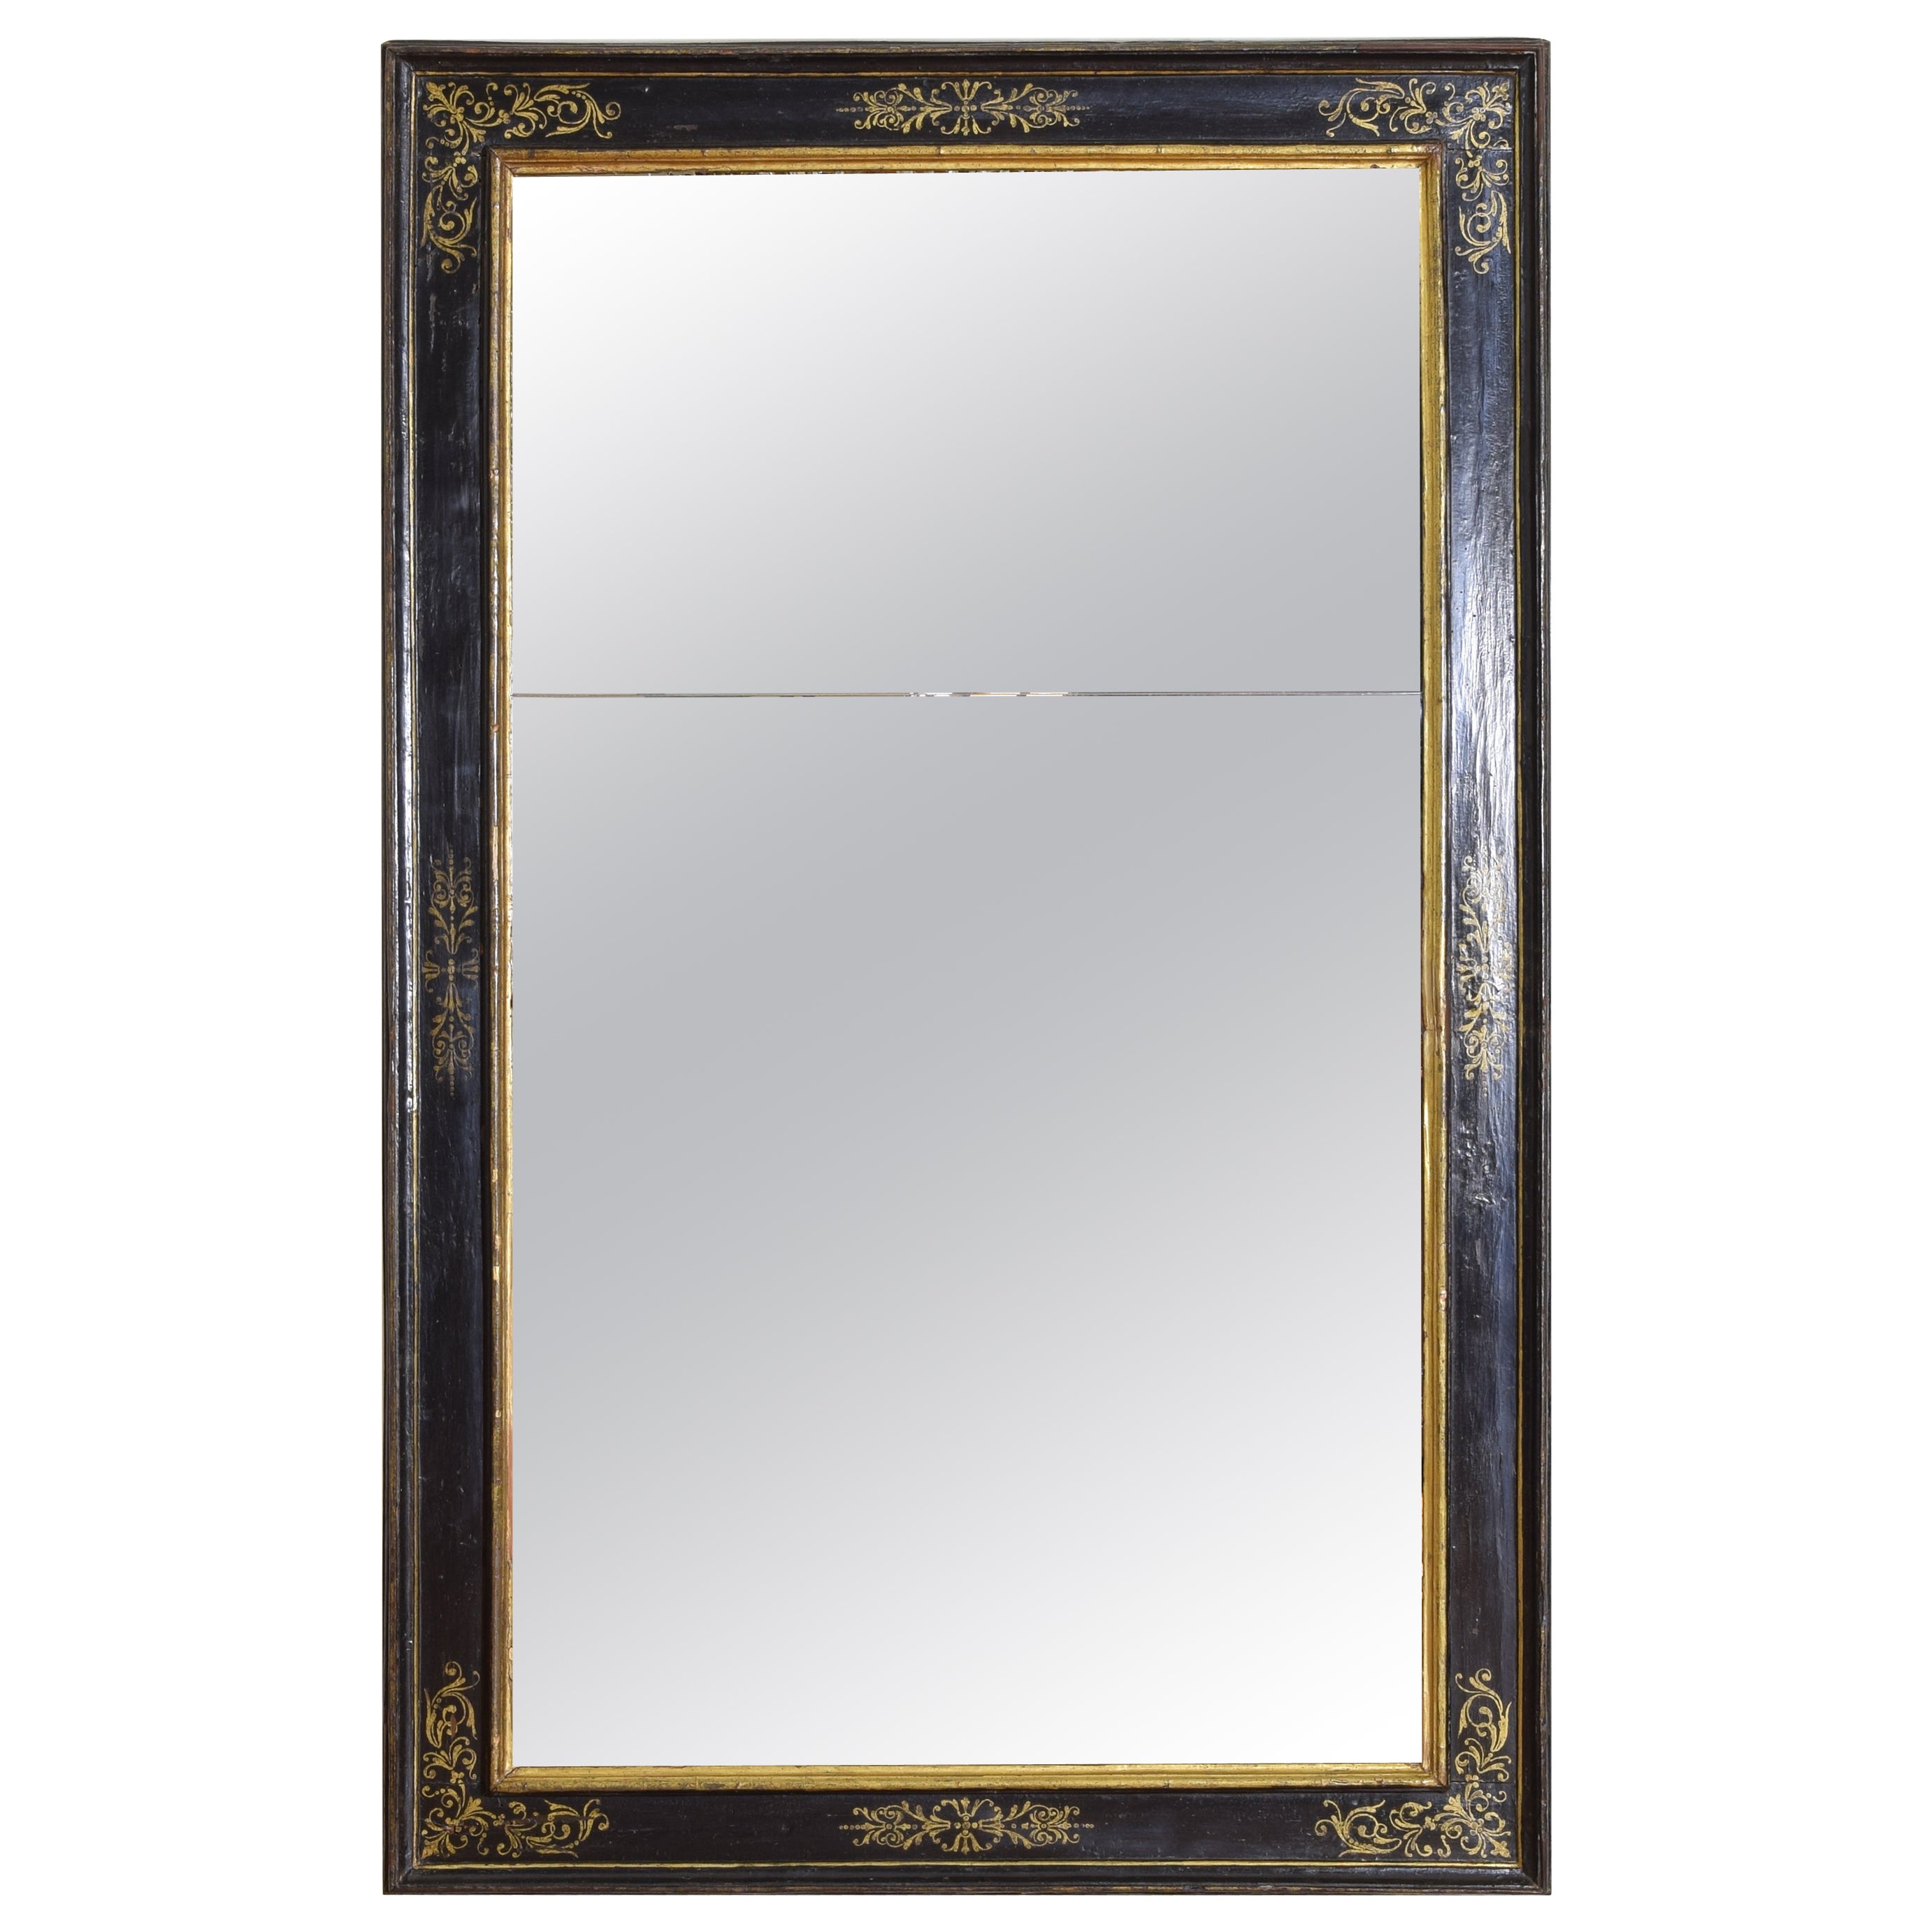 Italian, Firenze, Late Renaissance Ebonized and Gilt Painted Mirror, 17th Cen.